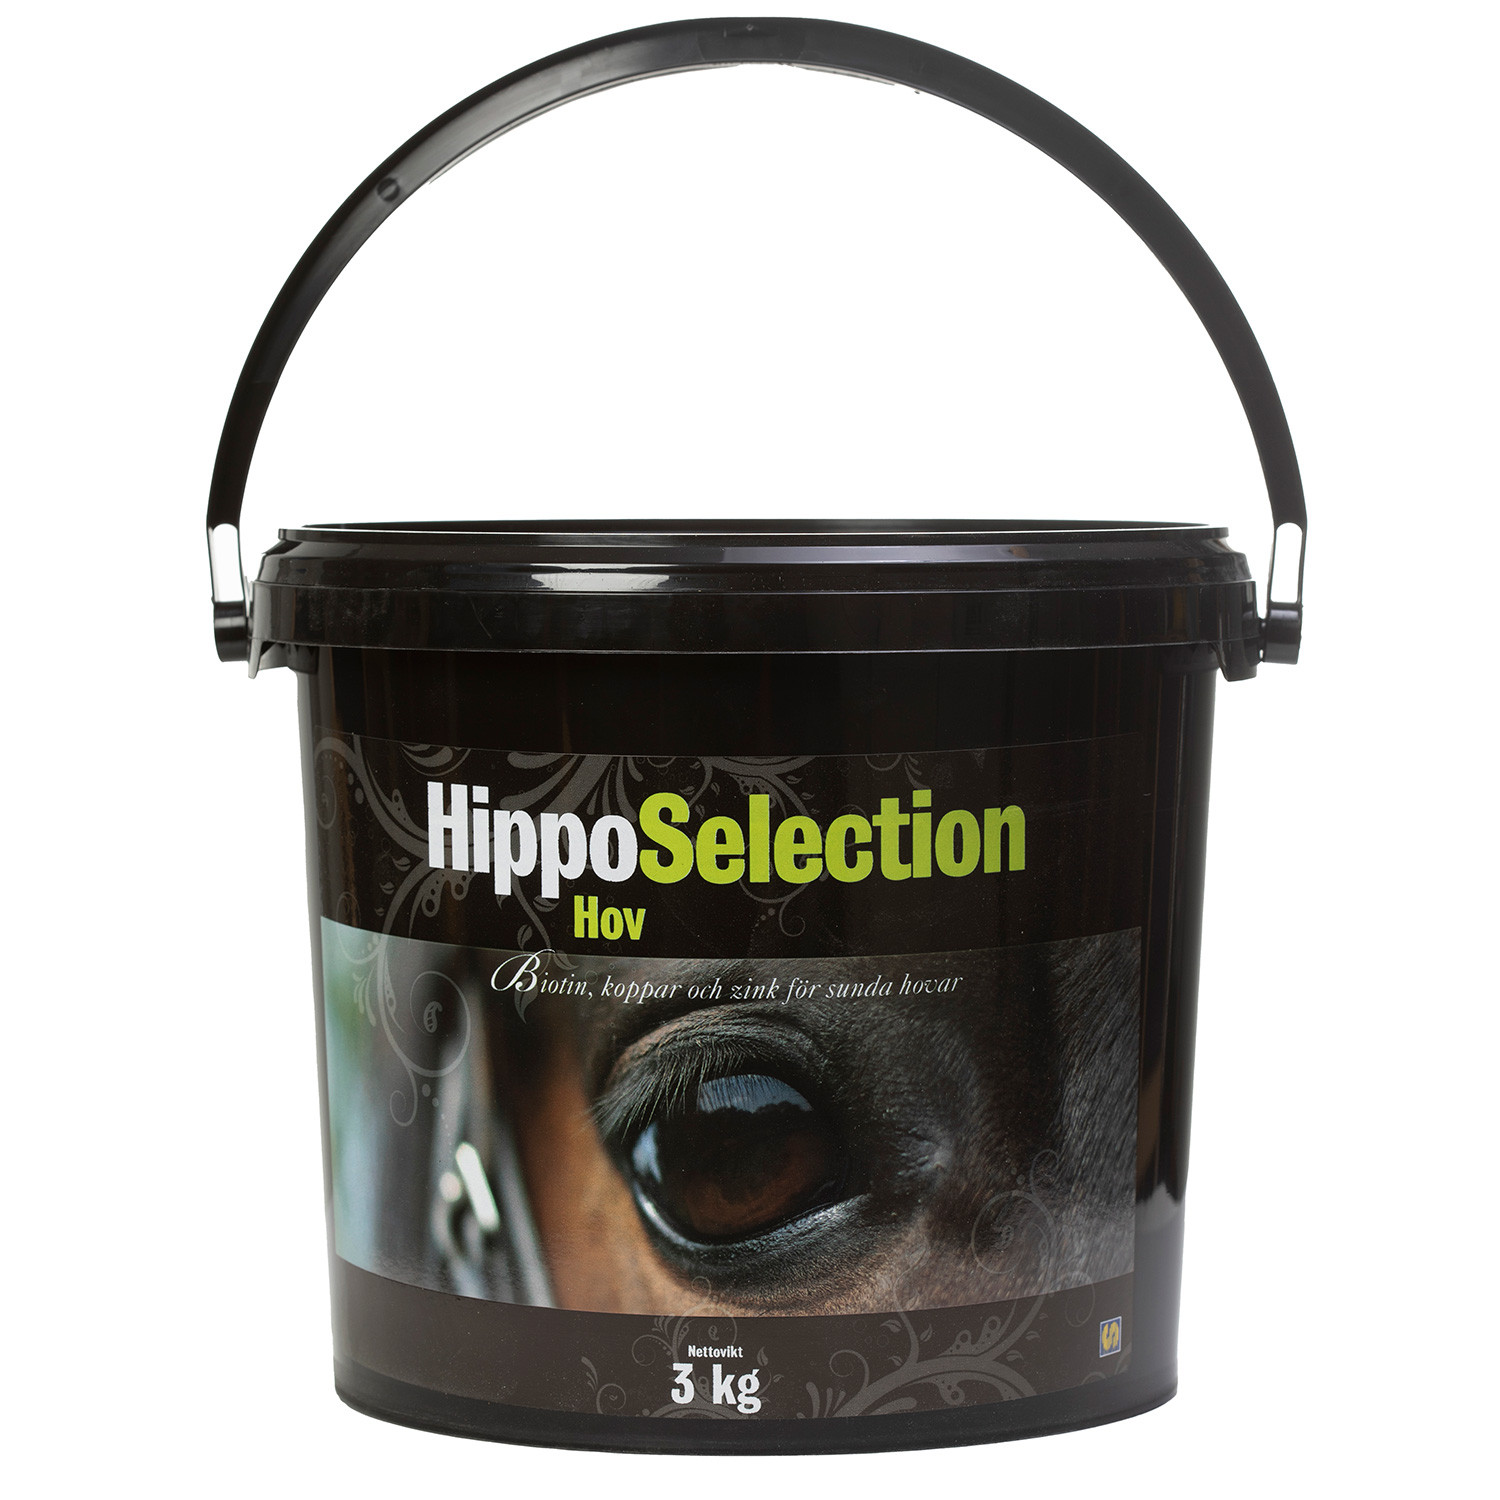 Hippo selection hov 3 kg